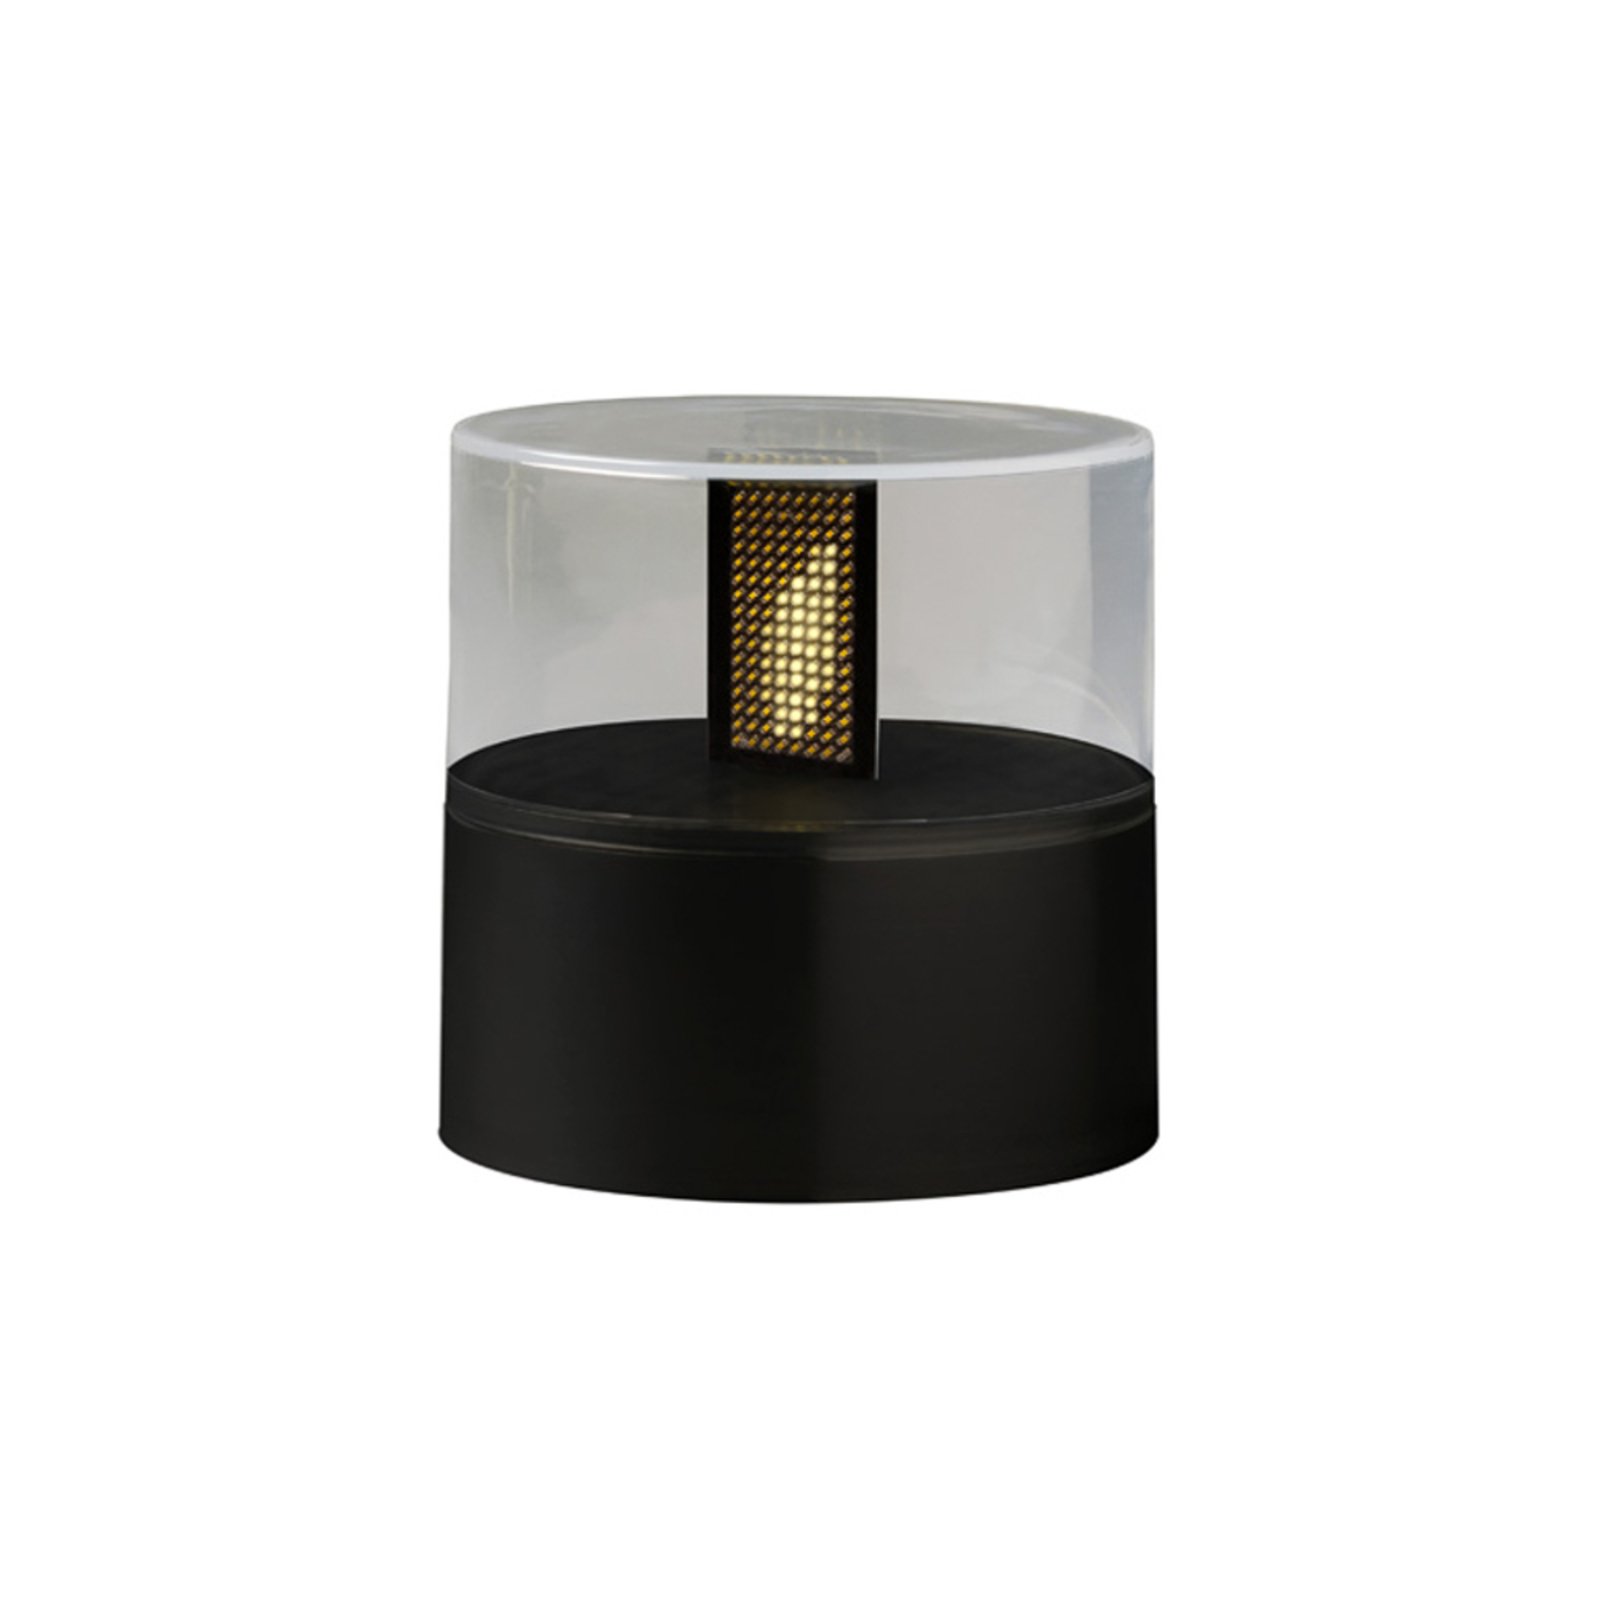 LED decorative light, flame effect, black base